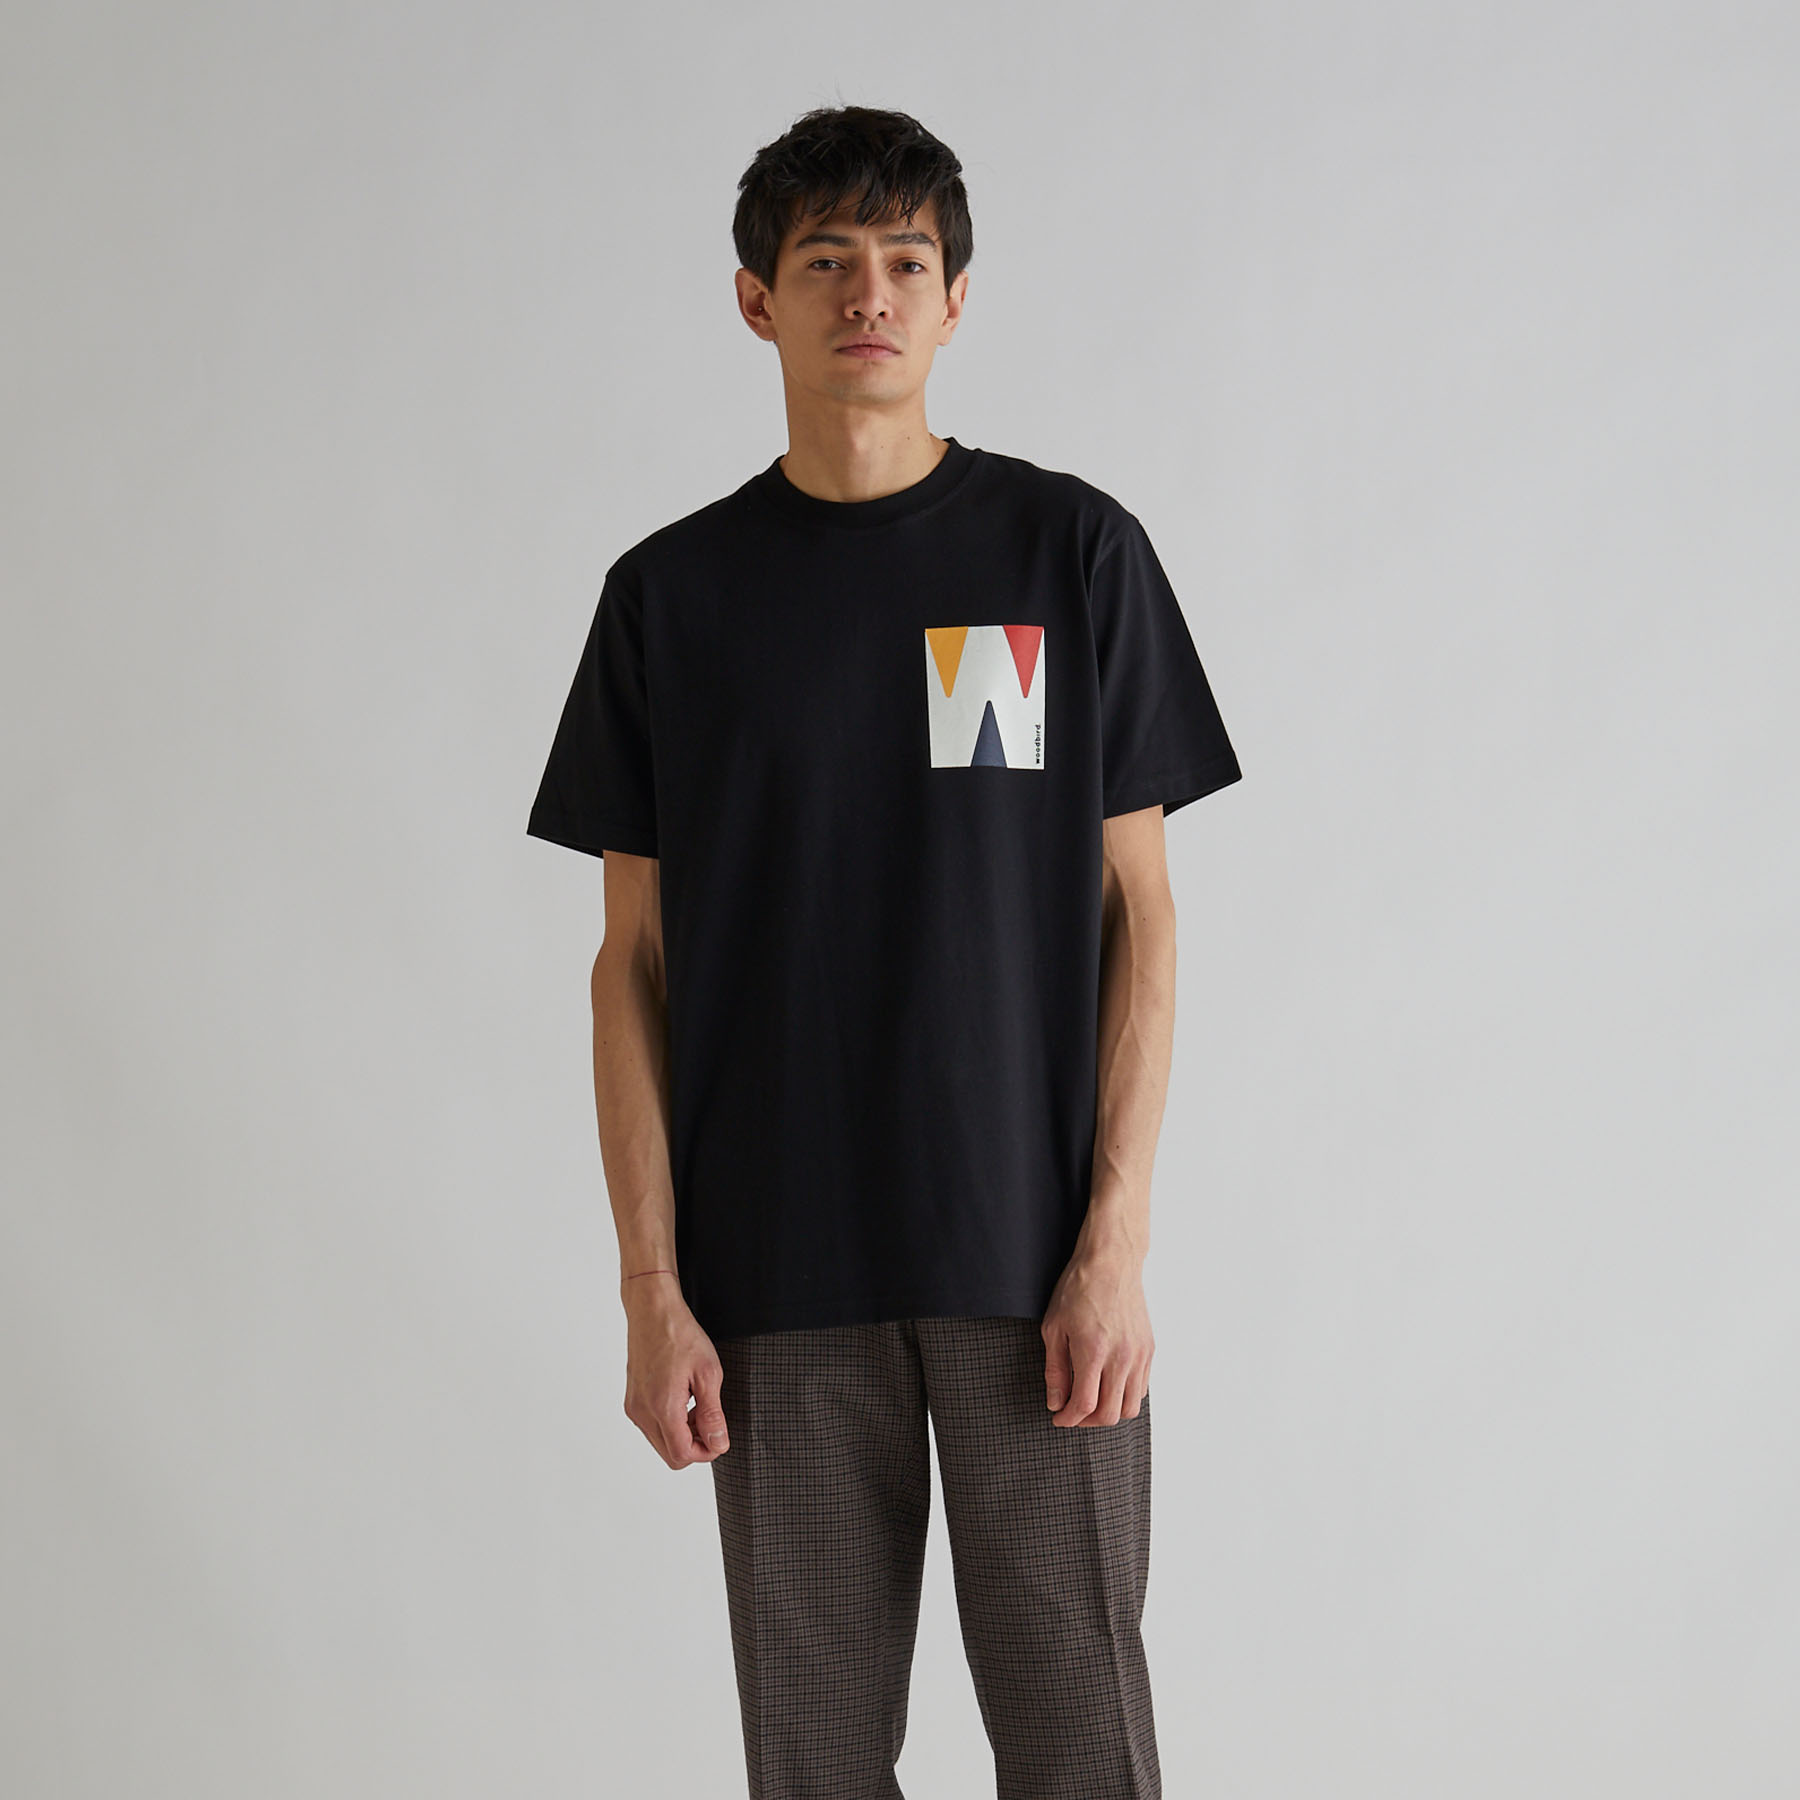 Woodbird - Trope box tee - T-shirts til mænd - Sort - XL